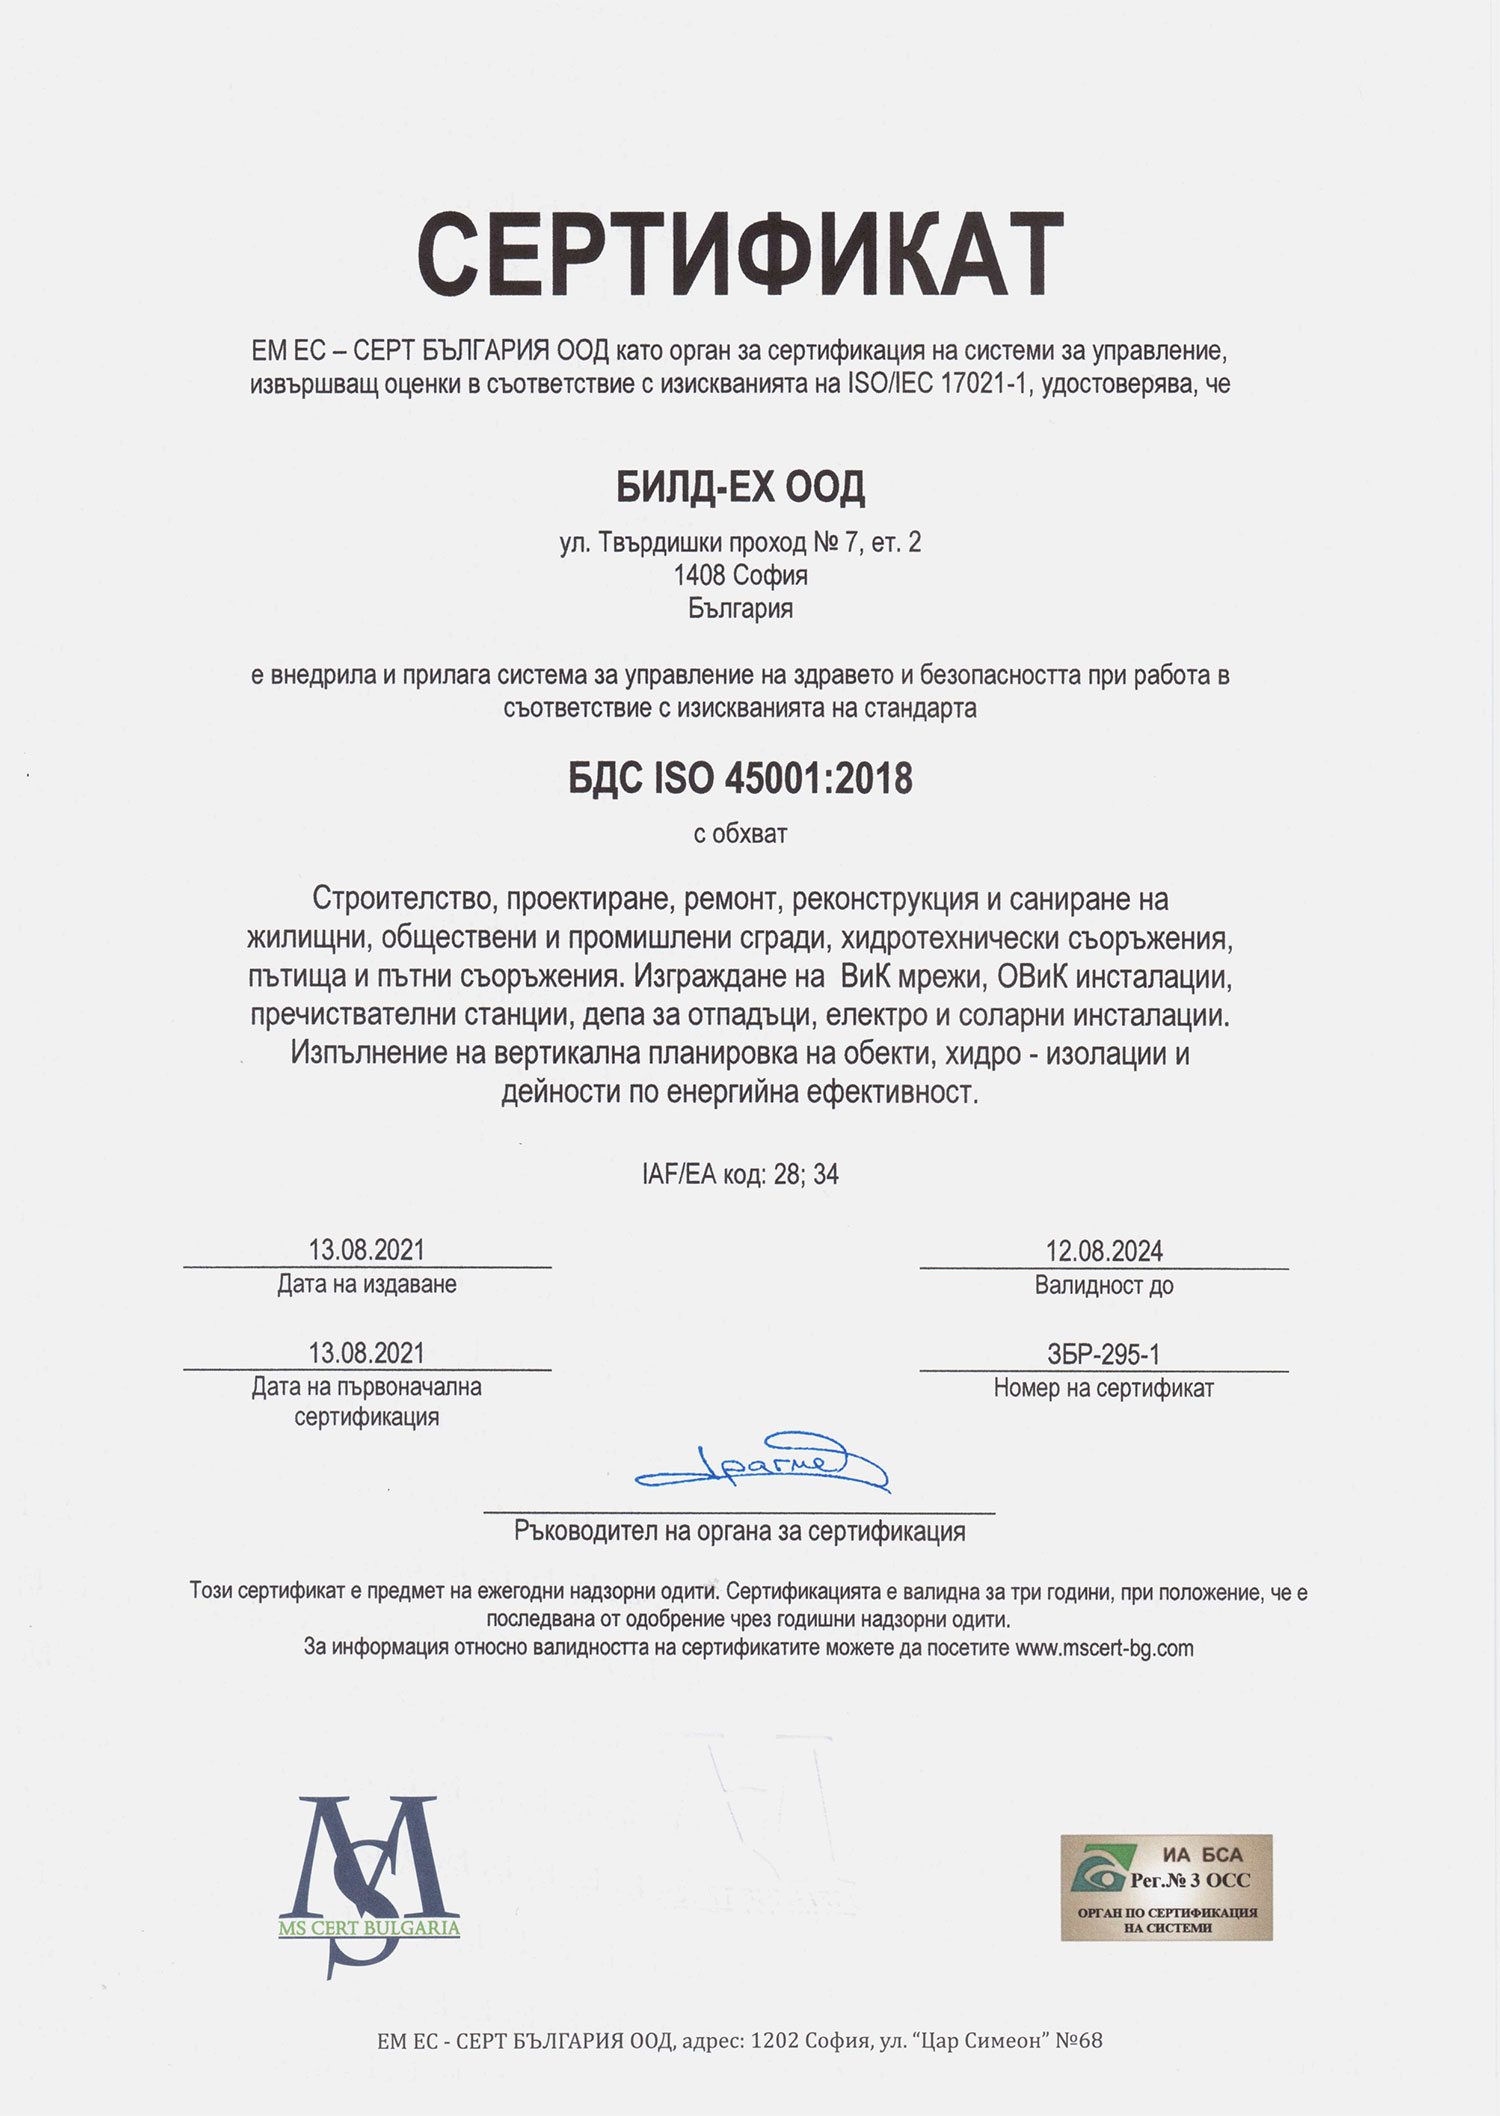 Certificate ISO 45001-Build-ex